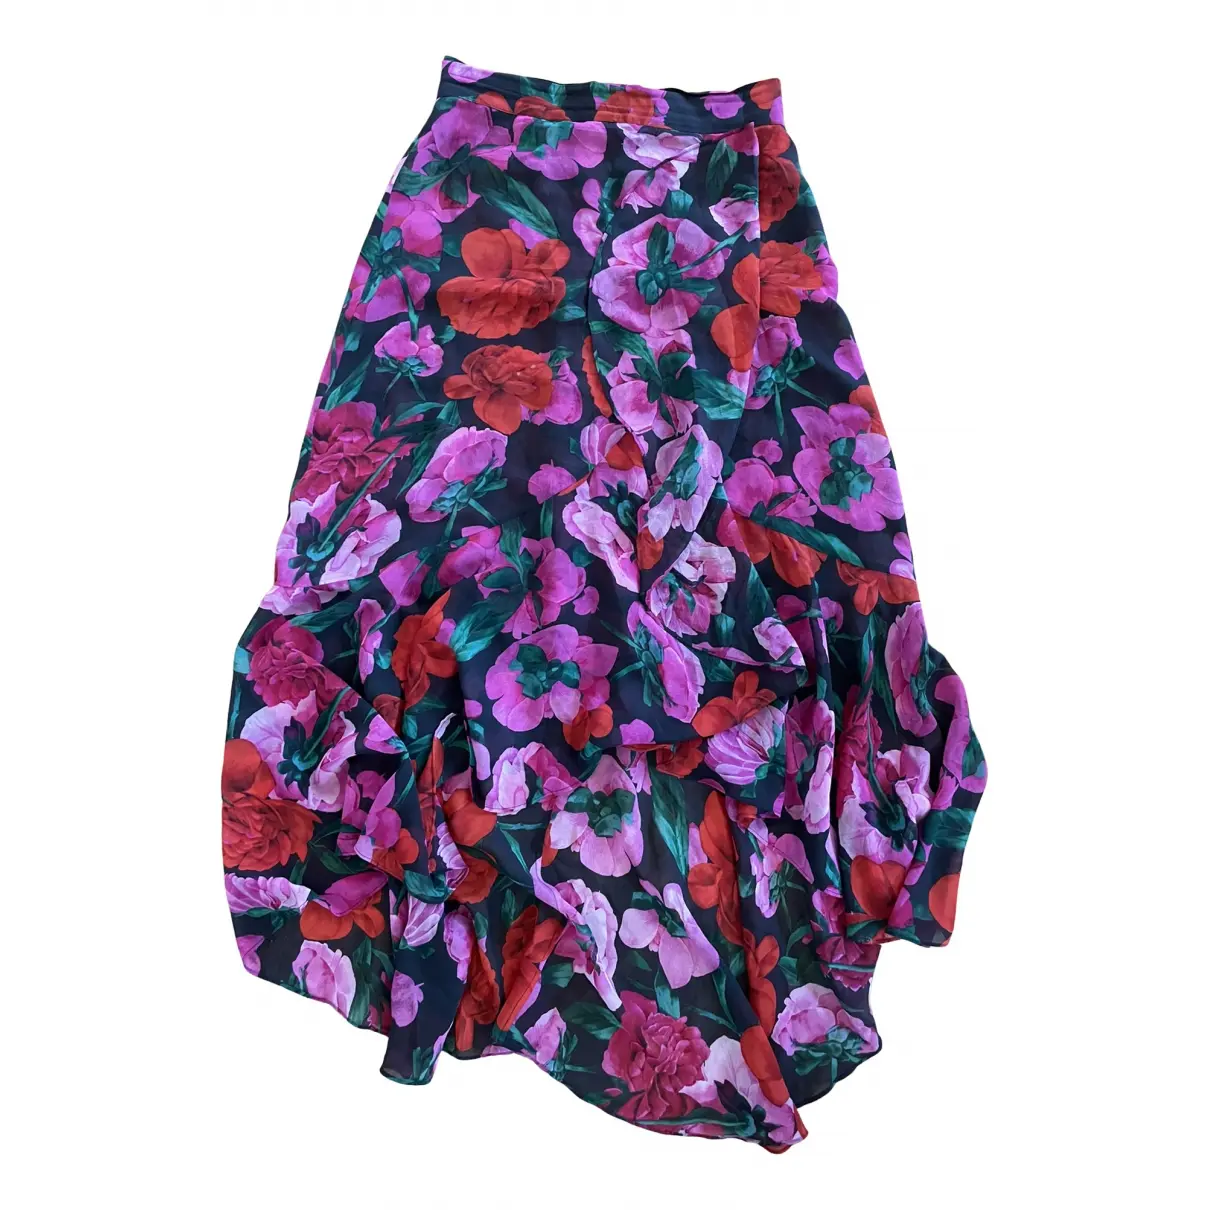 Spring Summer 2019 mid-length skirt The Kooples